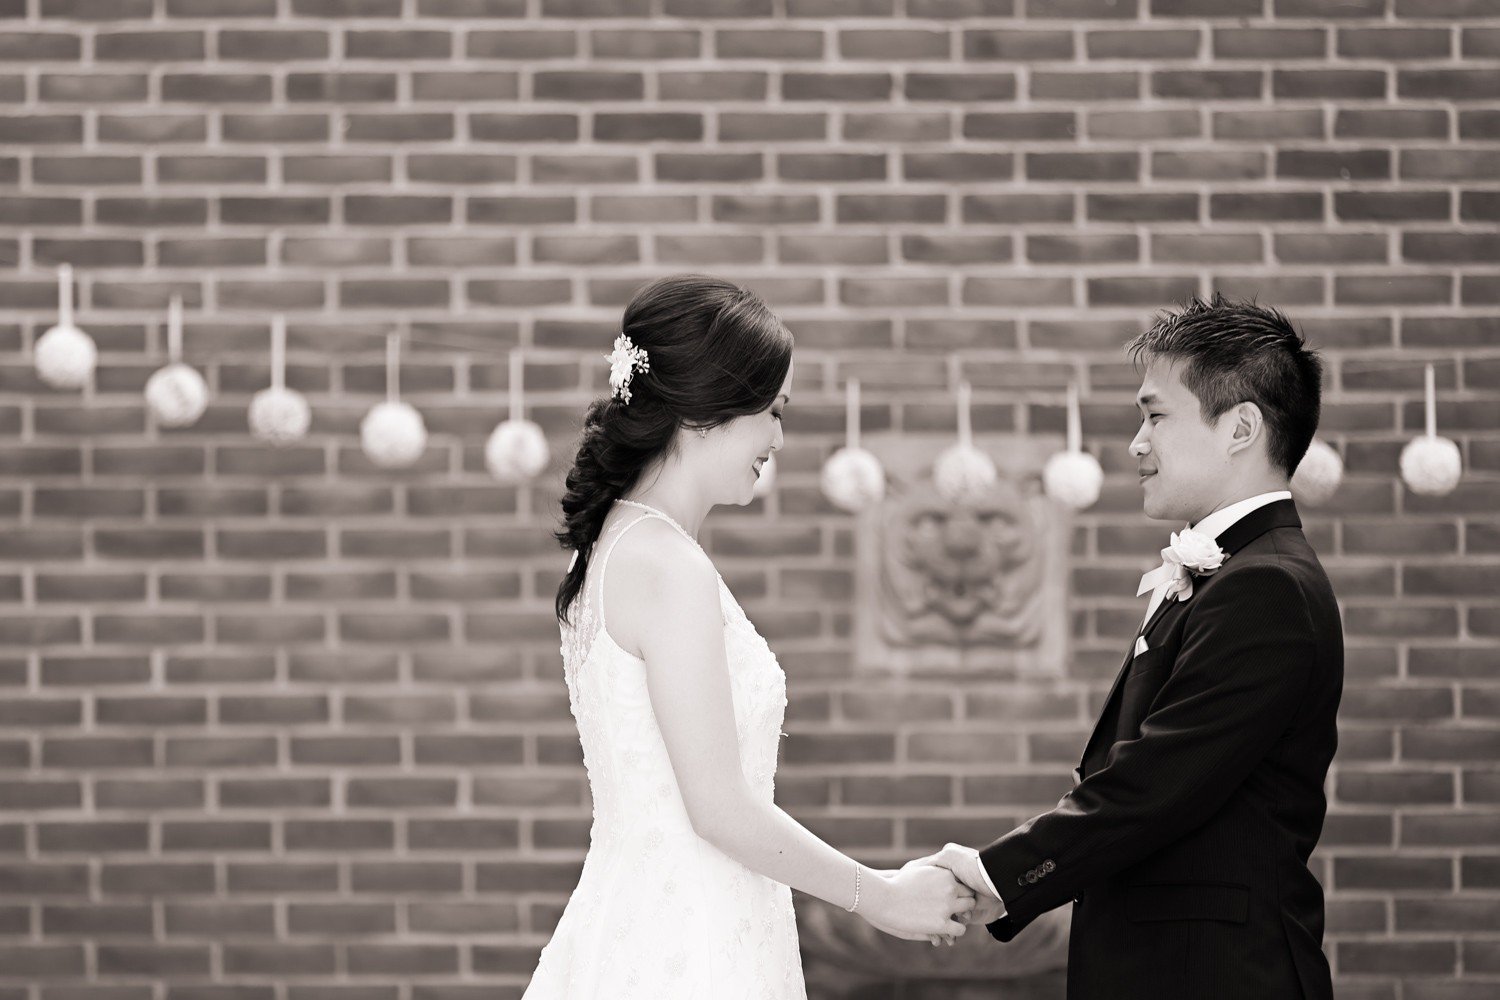 035 - - - Elaine & Boon-Hau- Columbus Centre Toronto Wedding